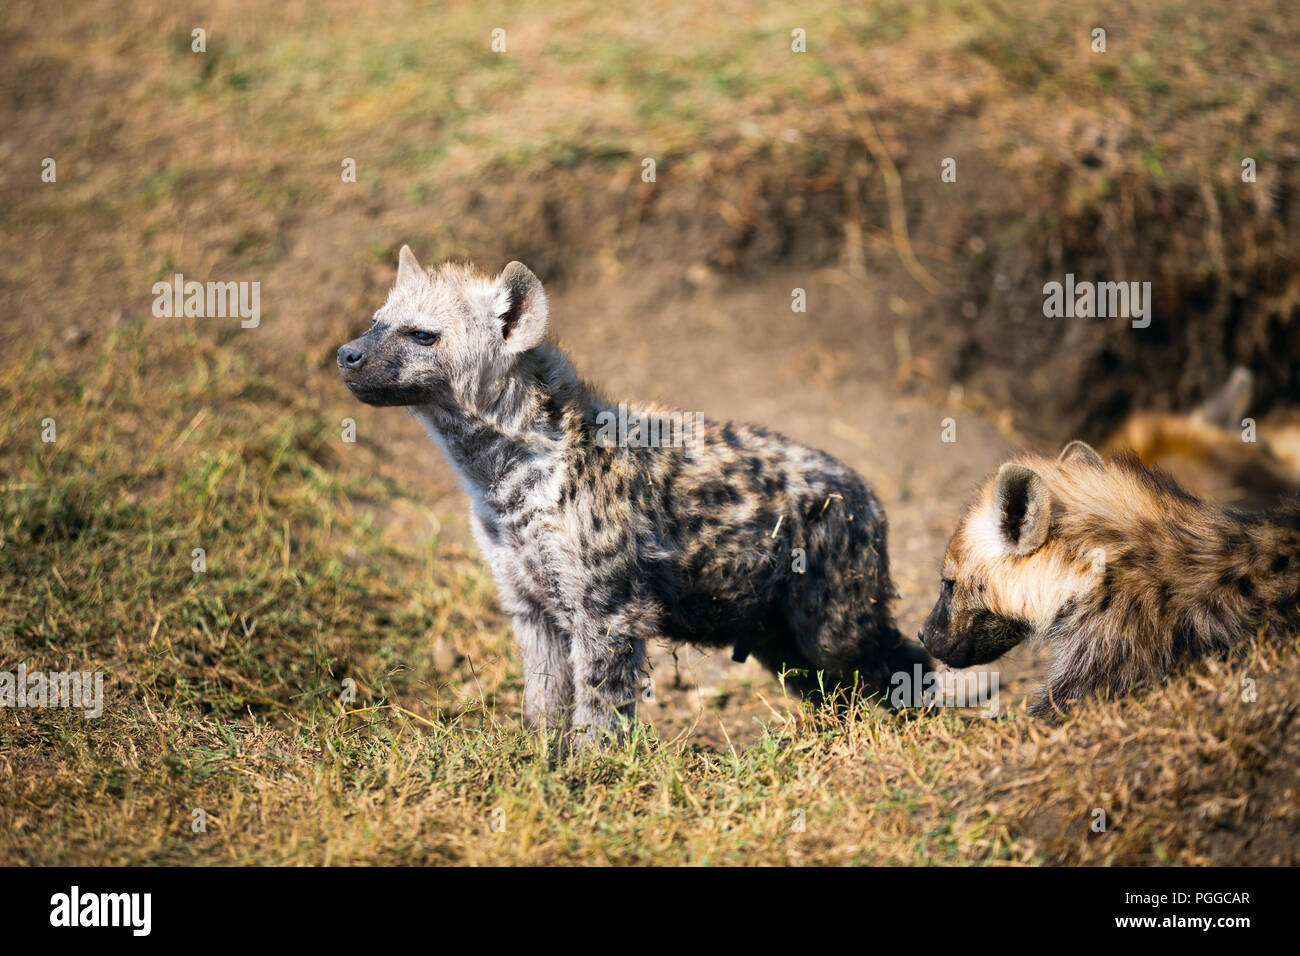 Hyena cubs in den in safari park in Kenya Stock Photo